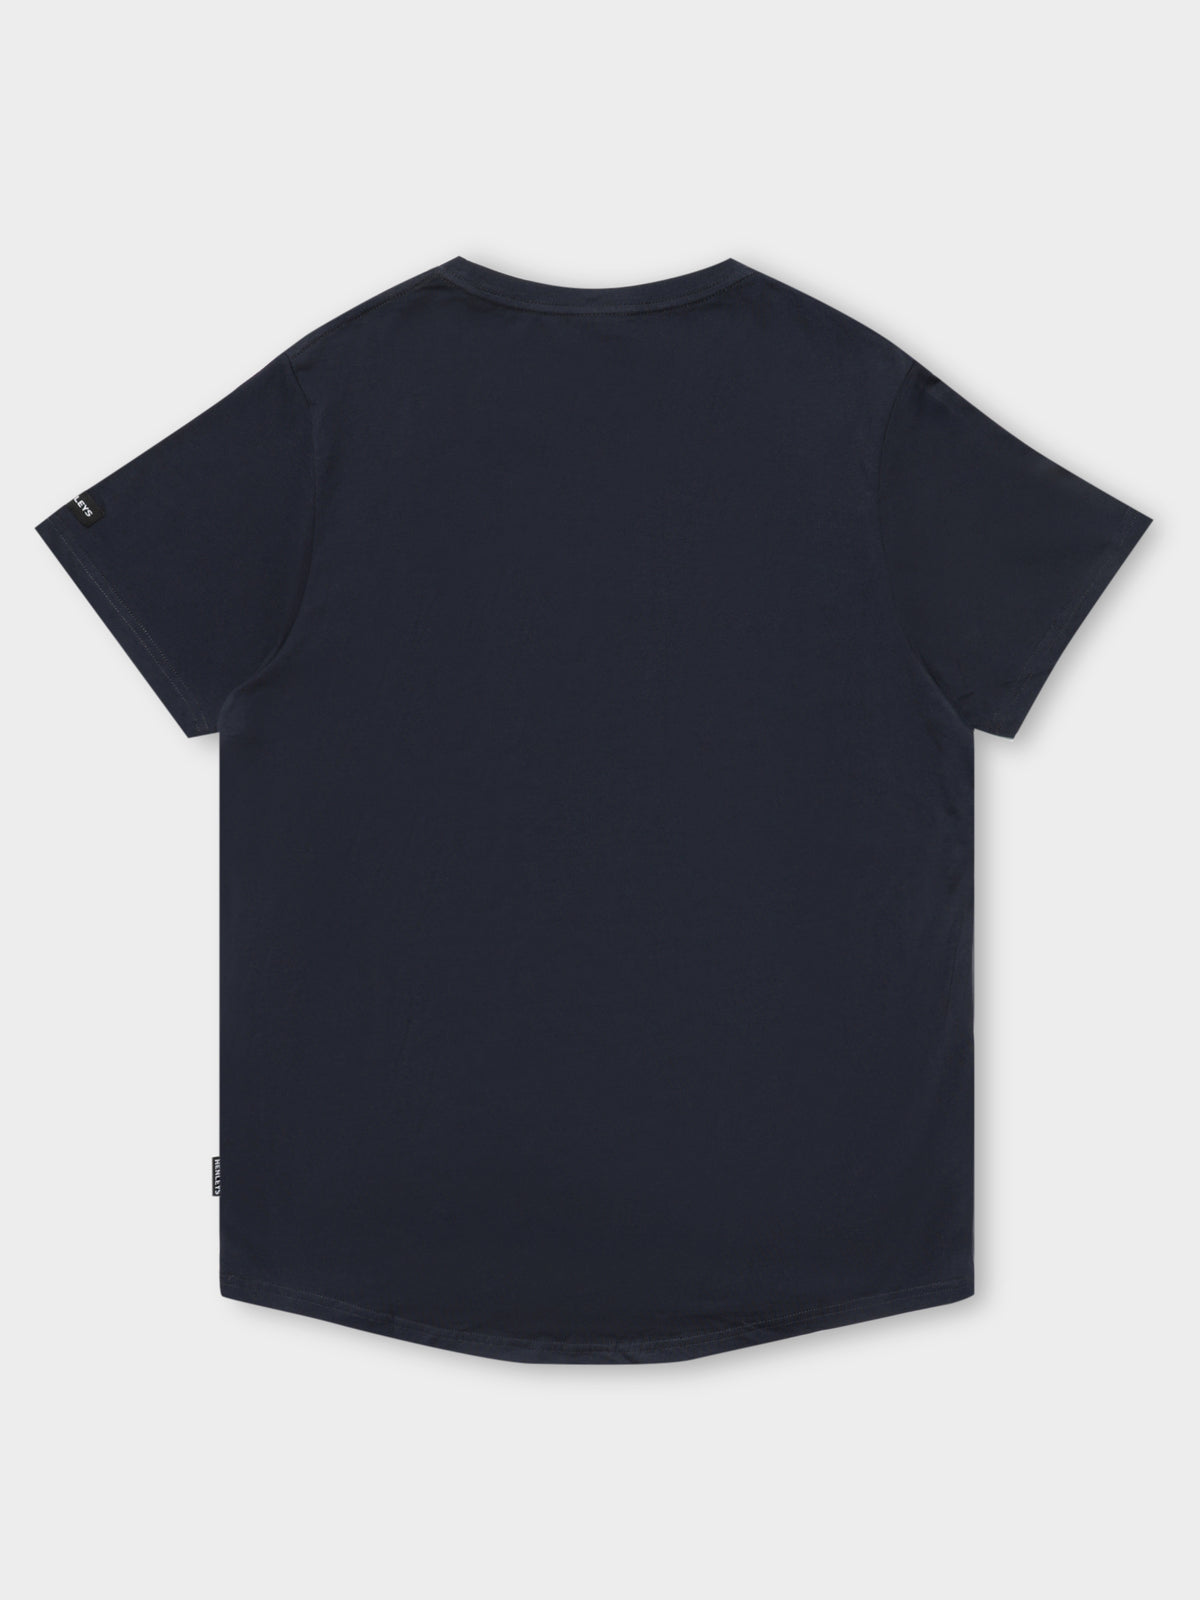 Hoffman T-Shirt in Midnight